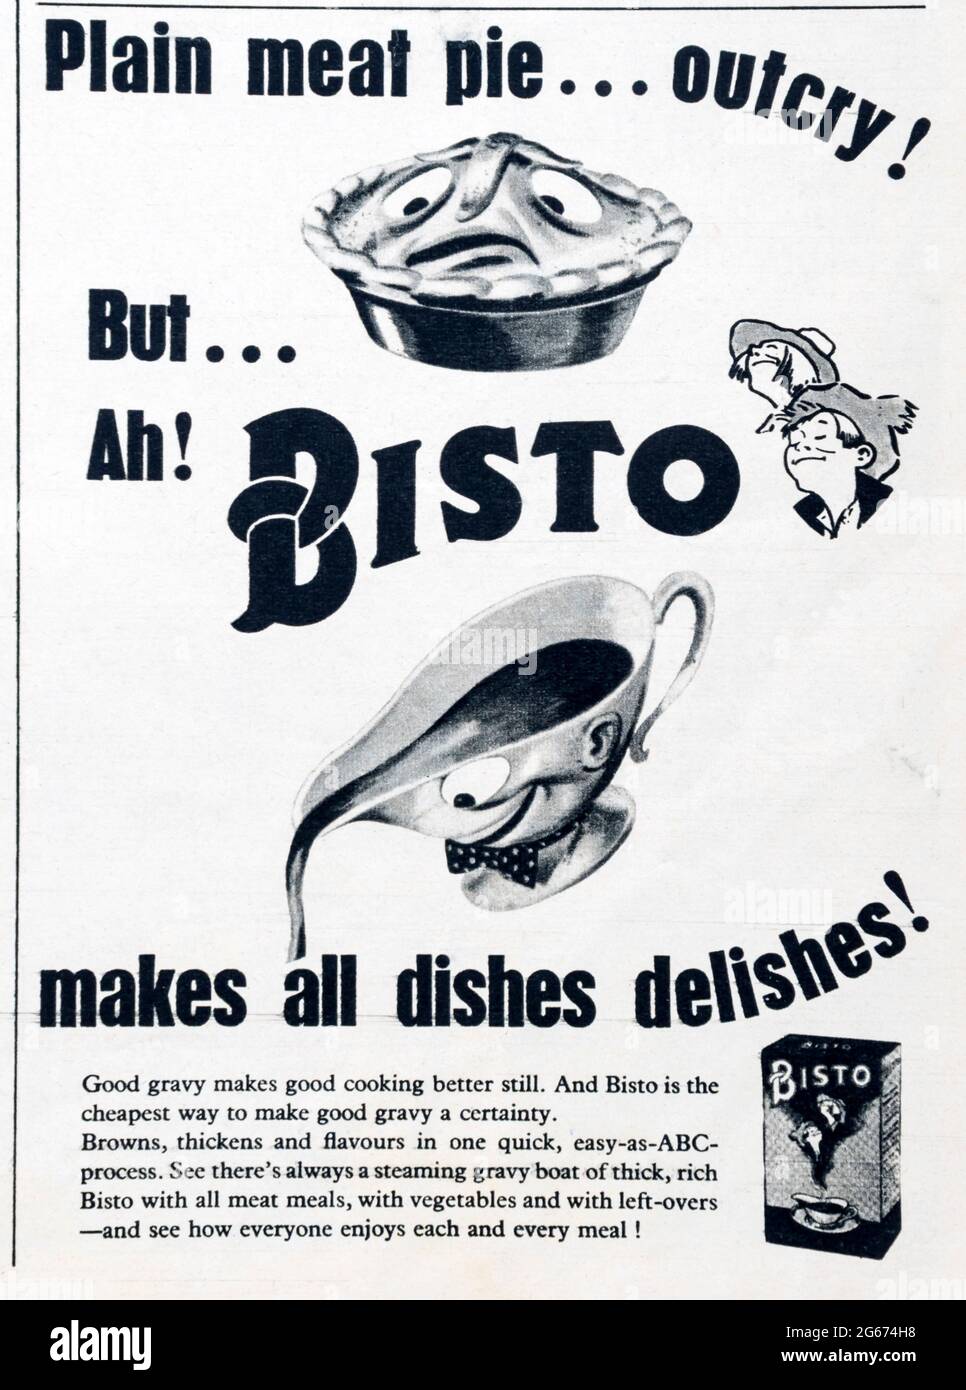 A 1950s magazine advertisement for Bisto gravy. Stock Photo